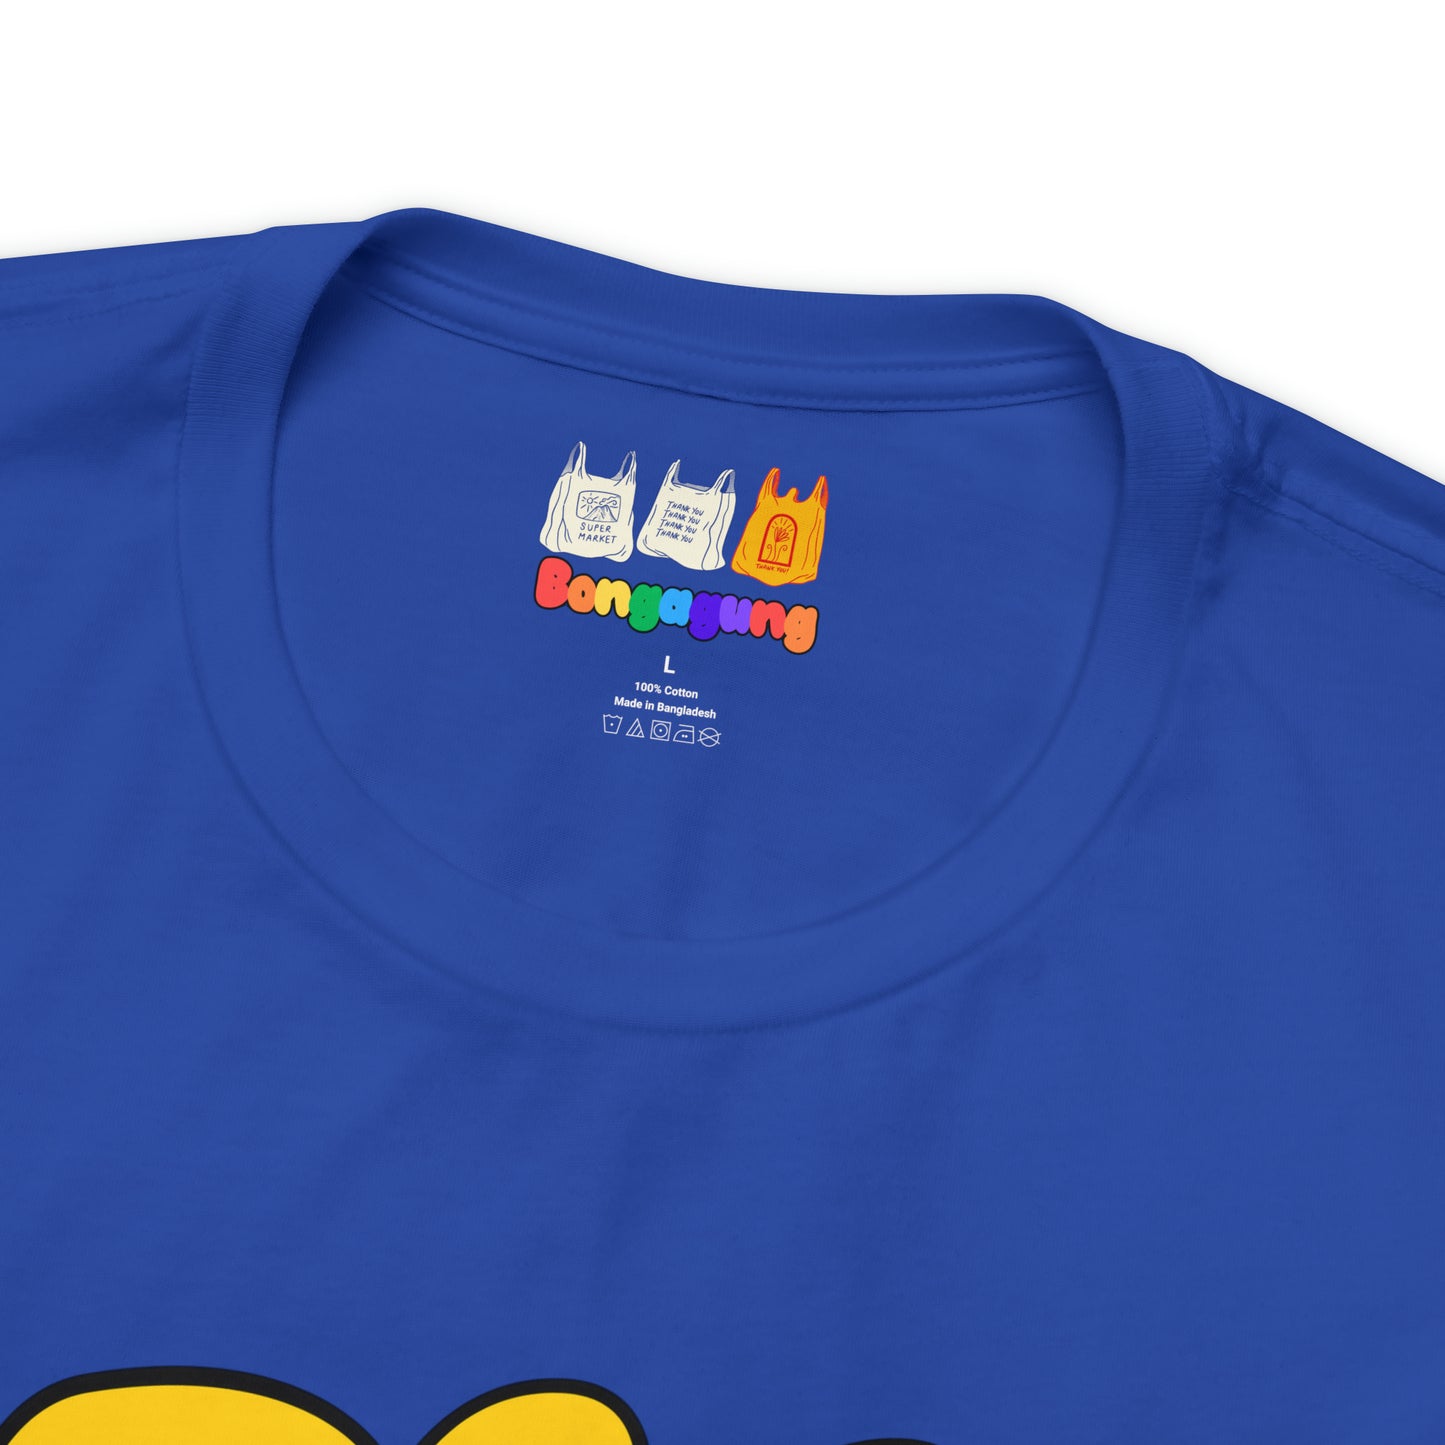 HELLA- Unisex Jersey Short Sleeve T-Shirt |  Oakland | East Bay | San Francisco | Northcal | Northern California